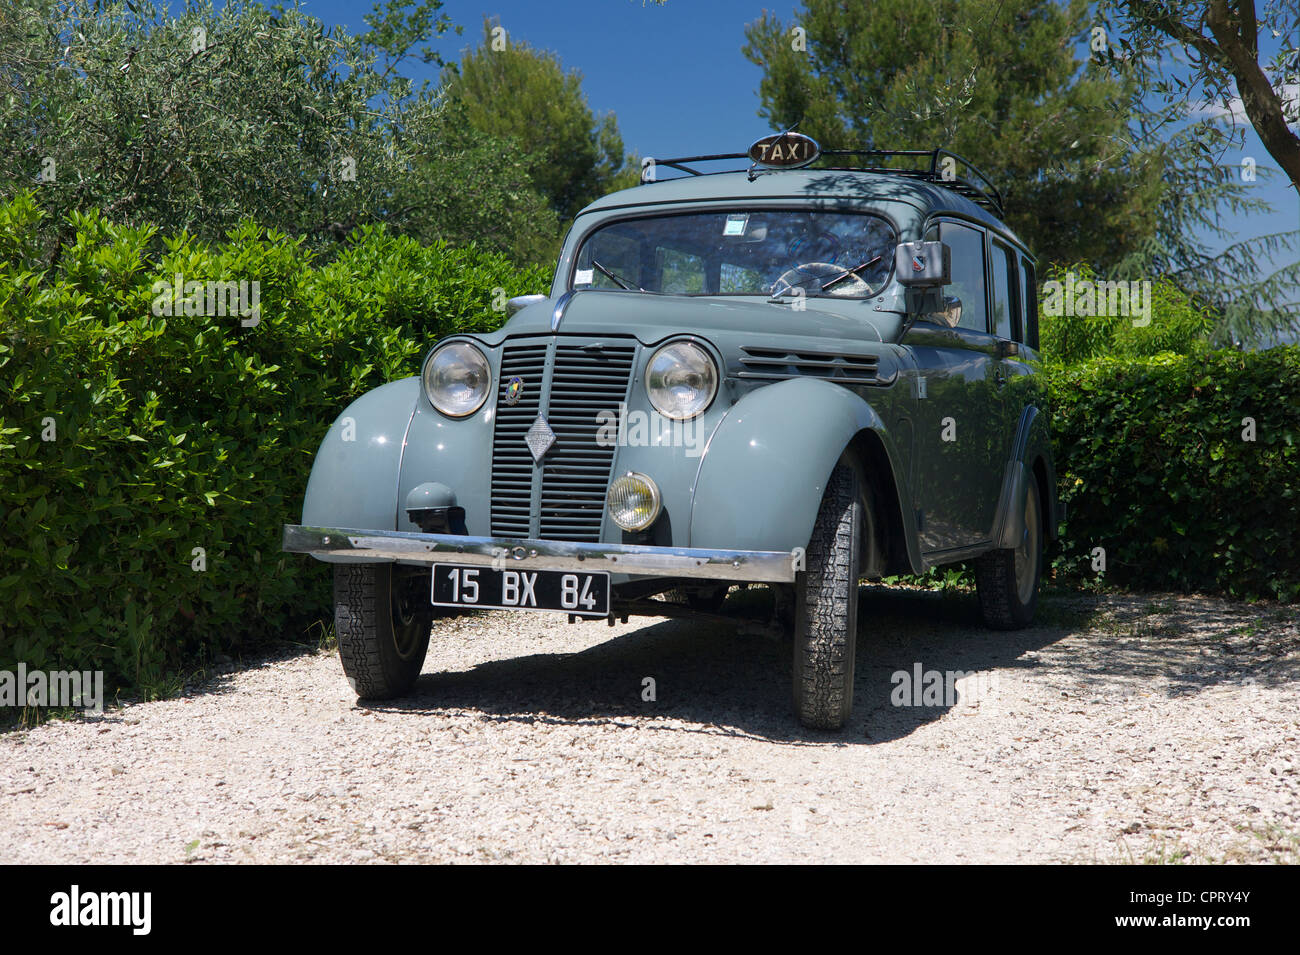 Renault Dauphinoise (Juvaquatre break) vintage car, France Stock Photo